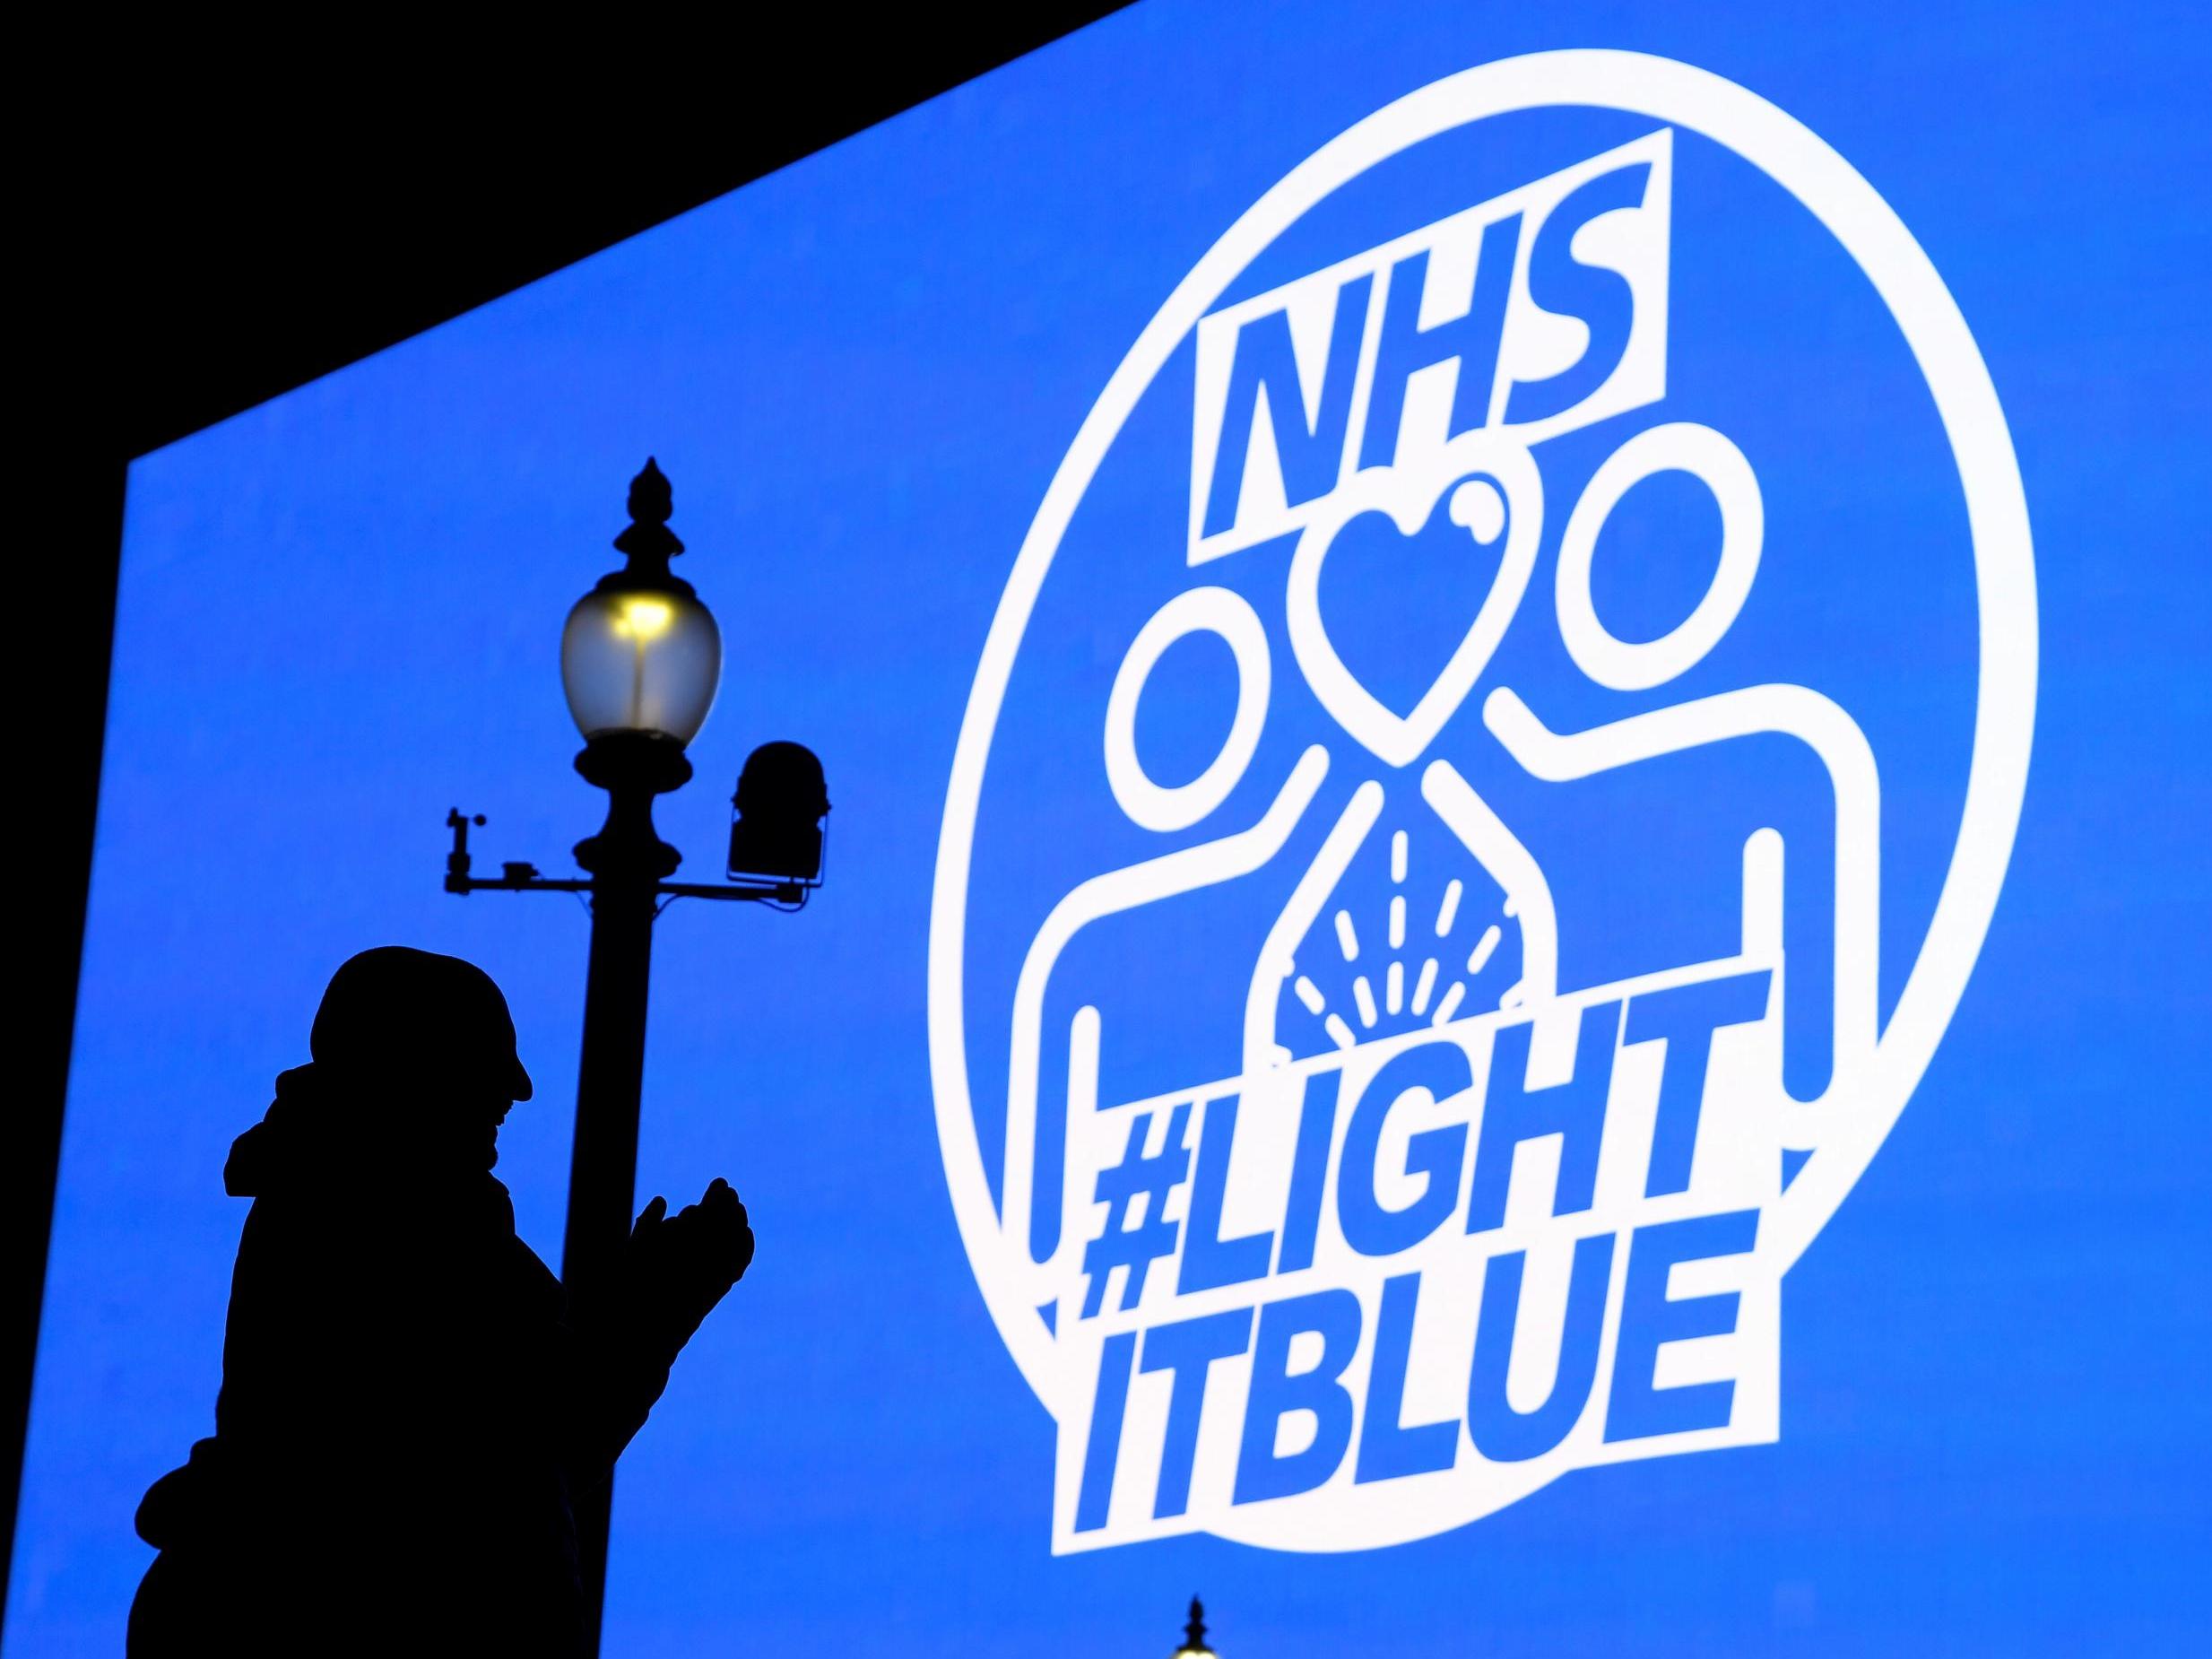 Landmarks in London, Liverpool, Birmingham and Gateshead will be illuminated in blue